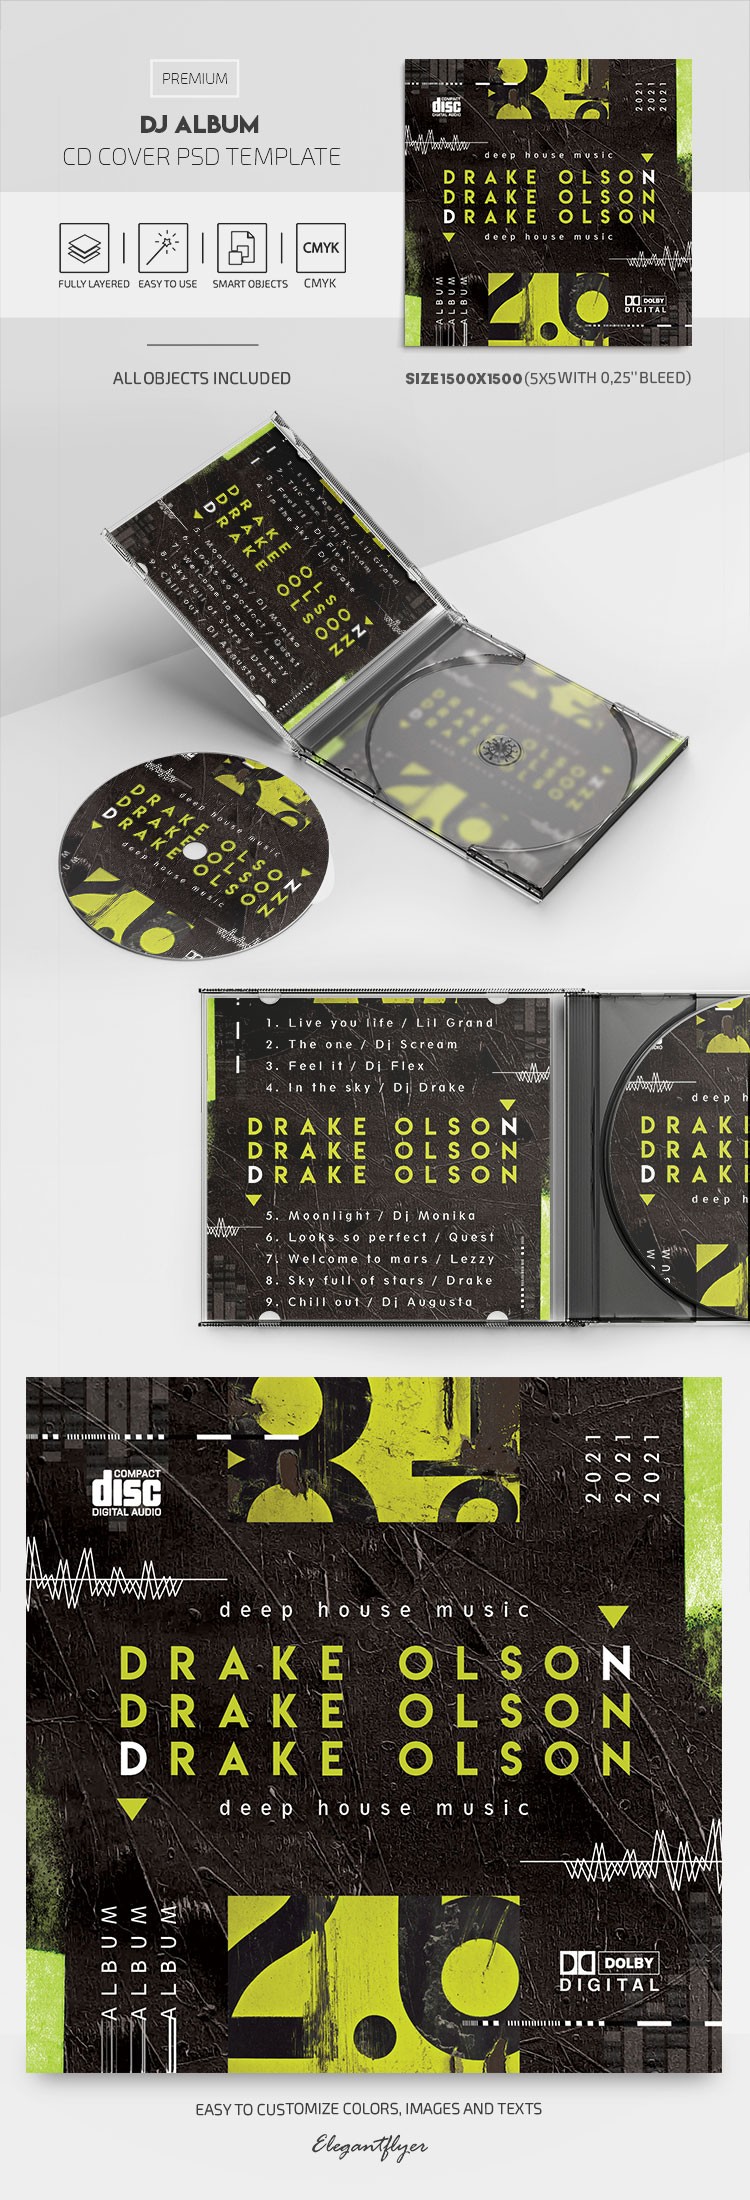 Capa do CD do álbum do DJ by ElegantFlyer